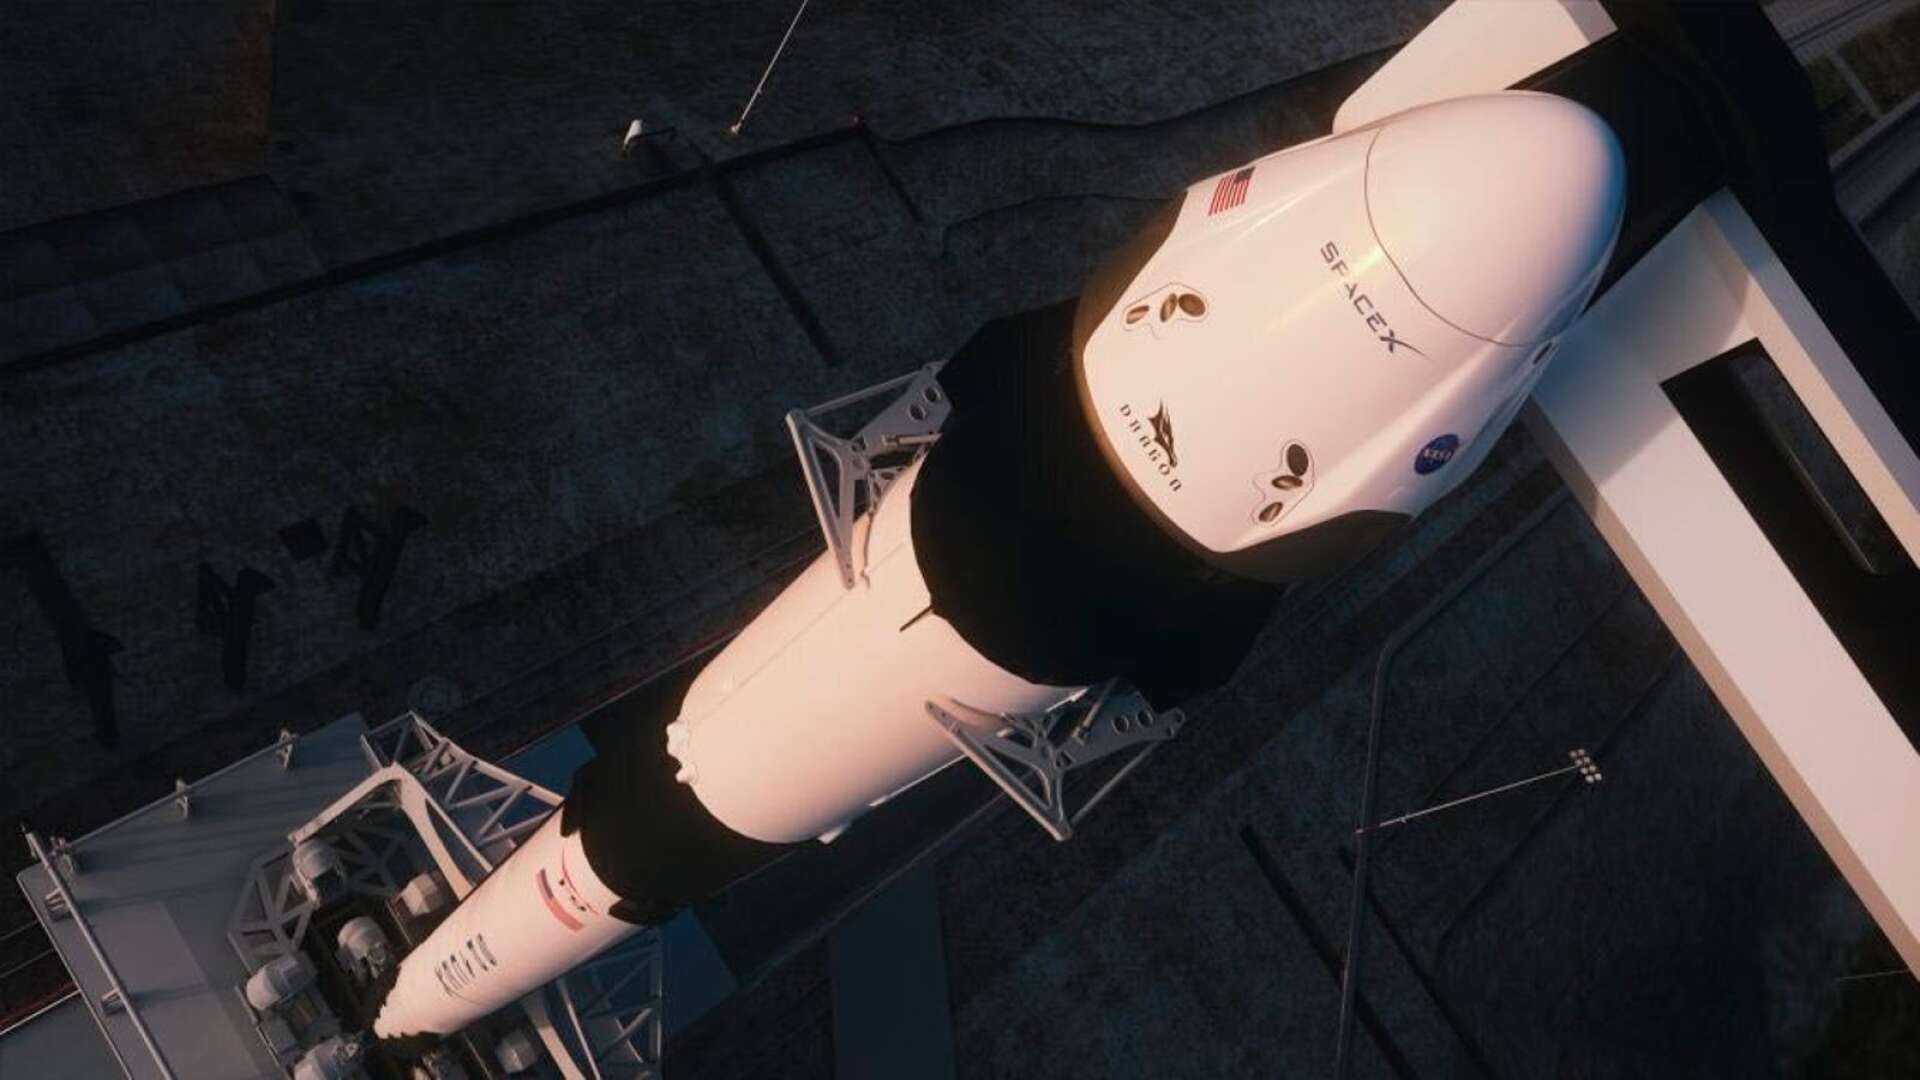 Dragon-kapseln på Falcon 9-raketen på Cape Canaveral i Florida.